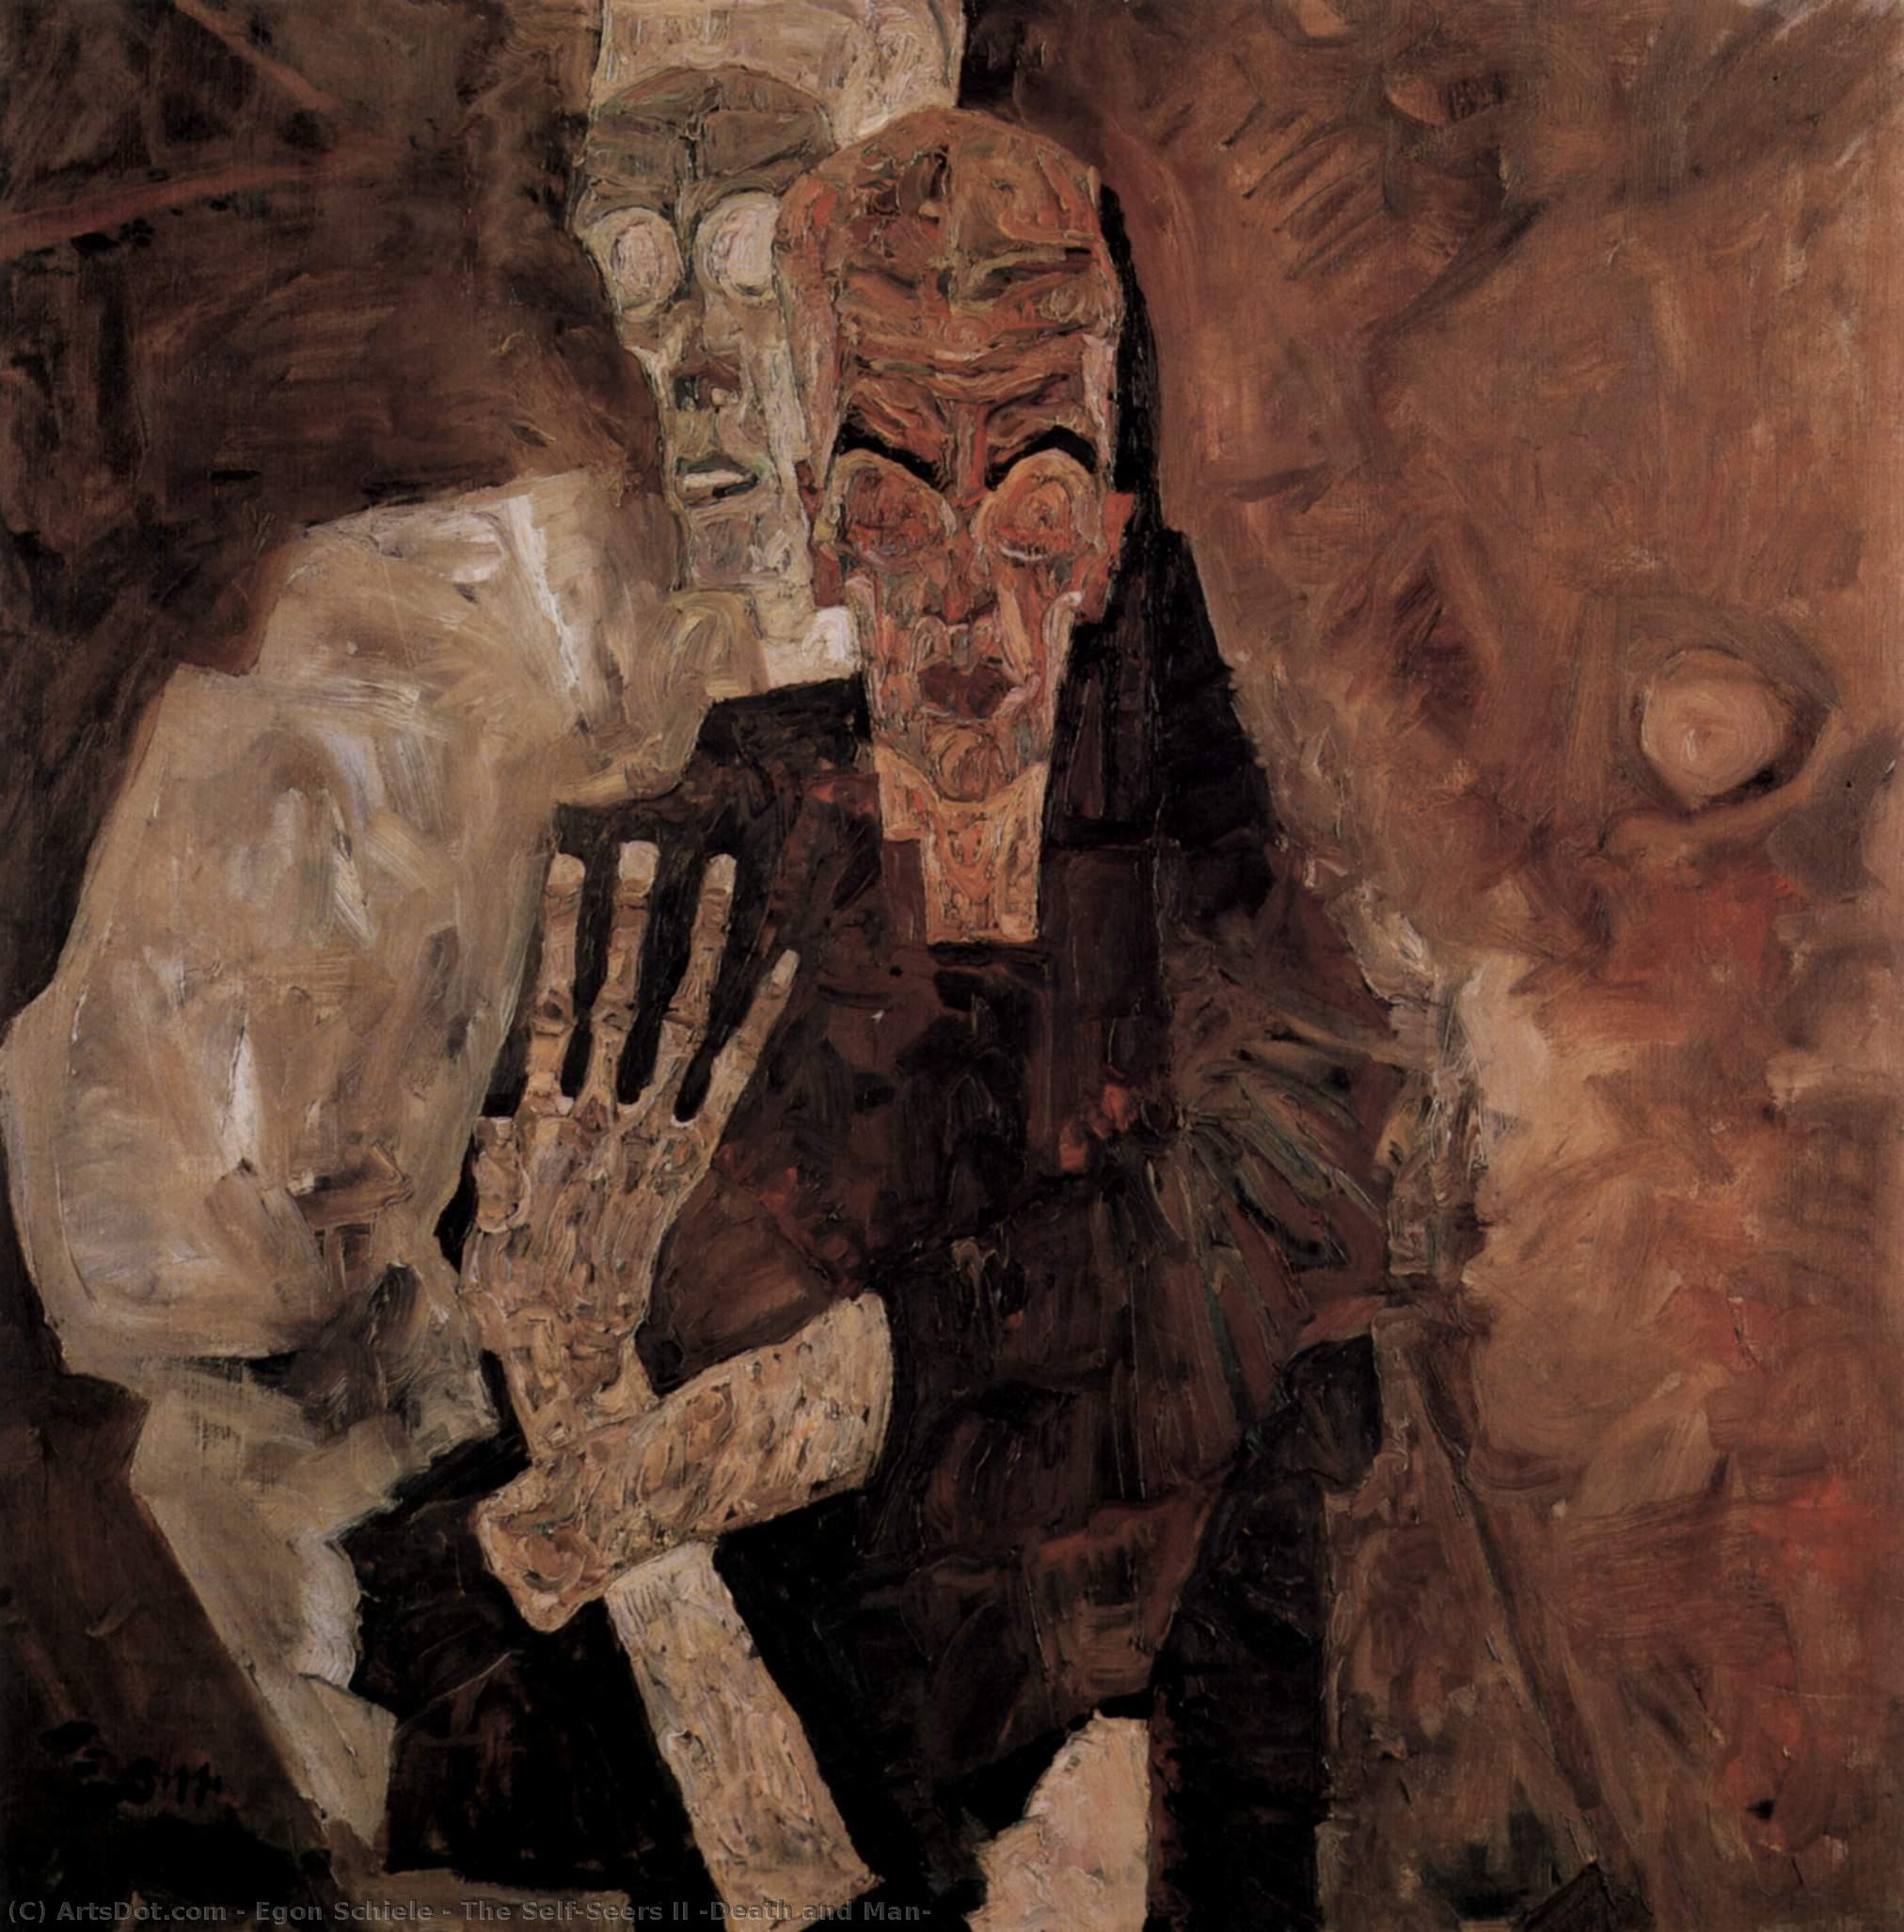 Buy Museum Art Reproductions The Self-Seers II (Death and Man), 1911 by Egon Schiele (1890-1918, Croatia) | ArtsDot.com